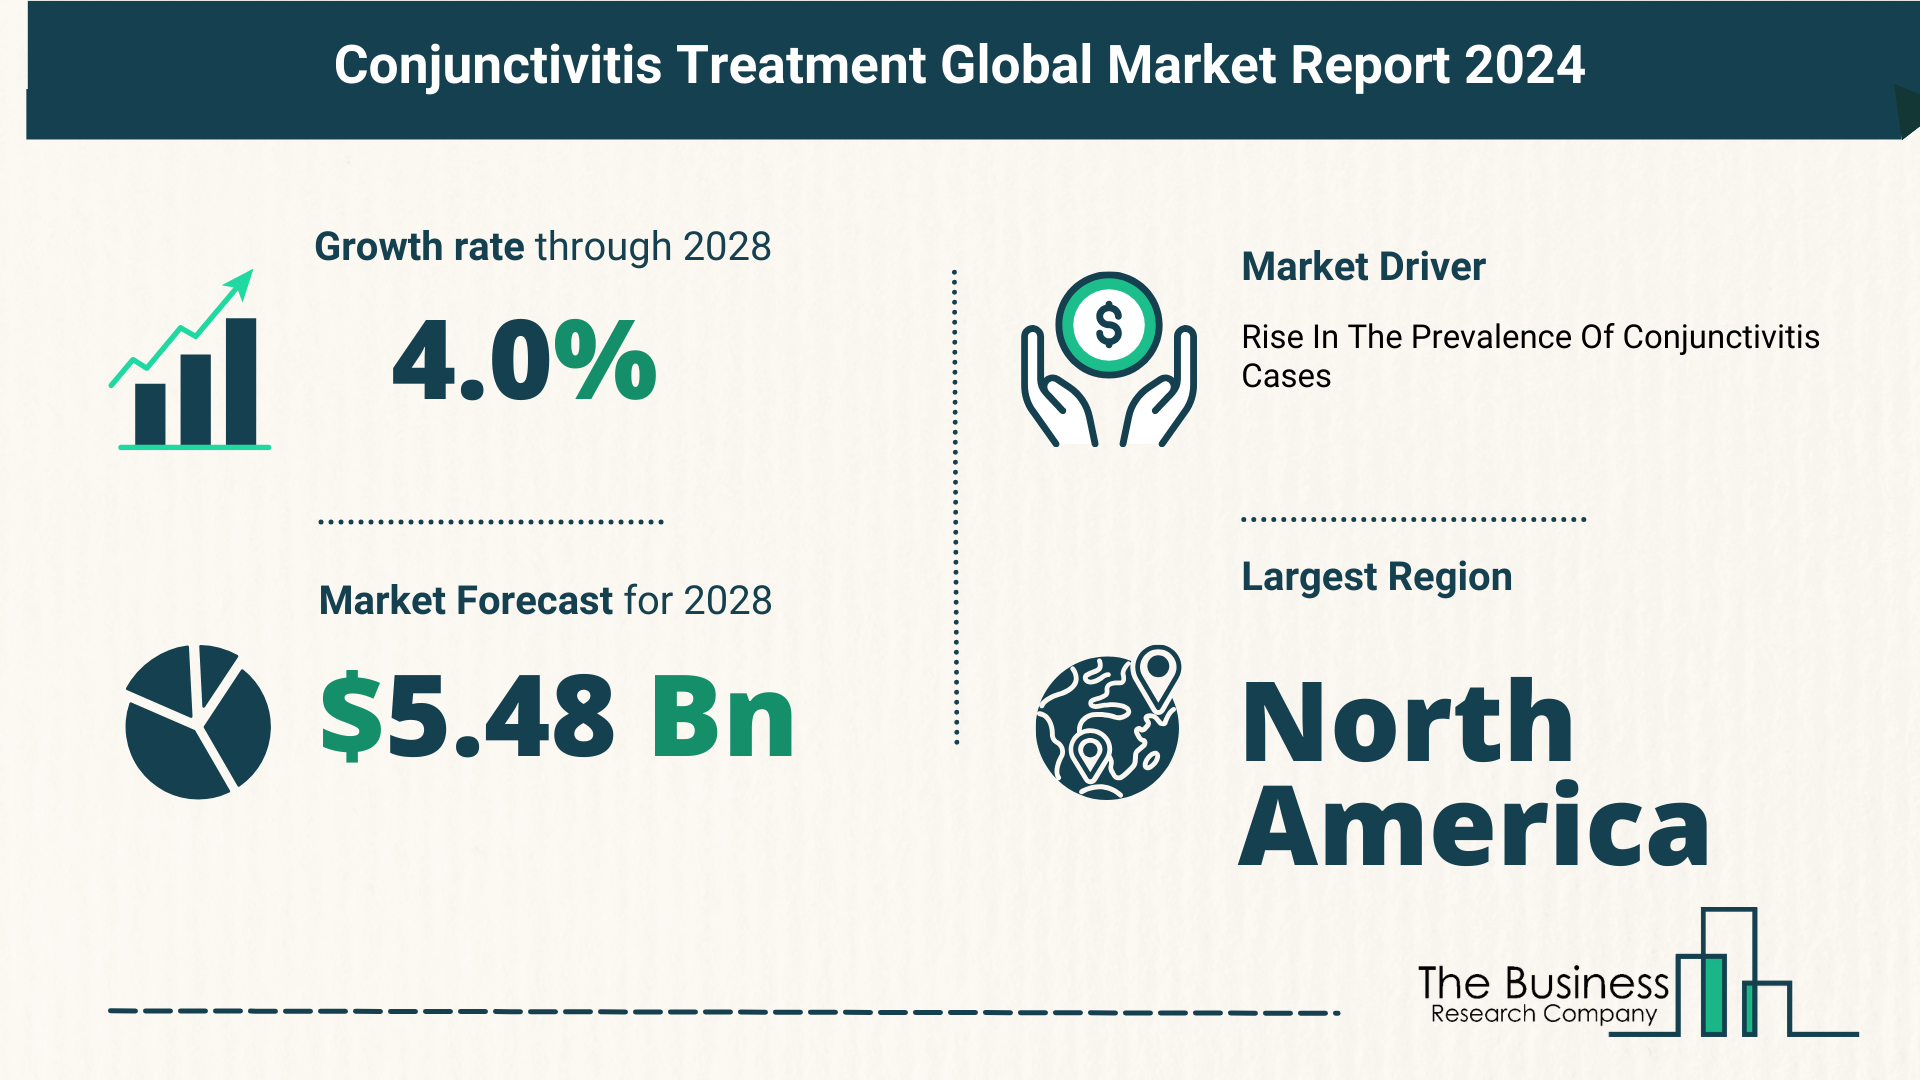 Global Conjunctivitis Treatment Market